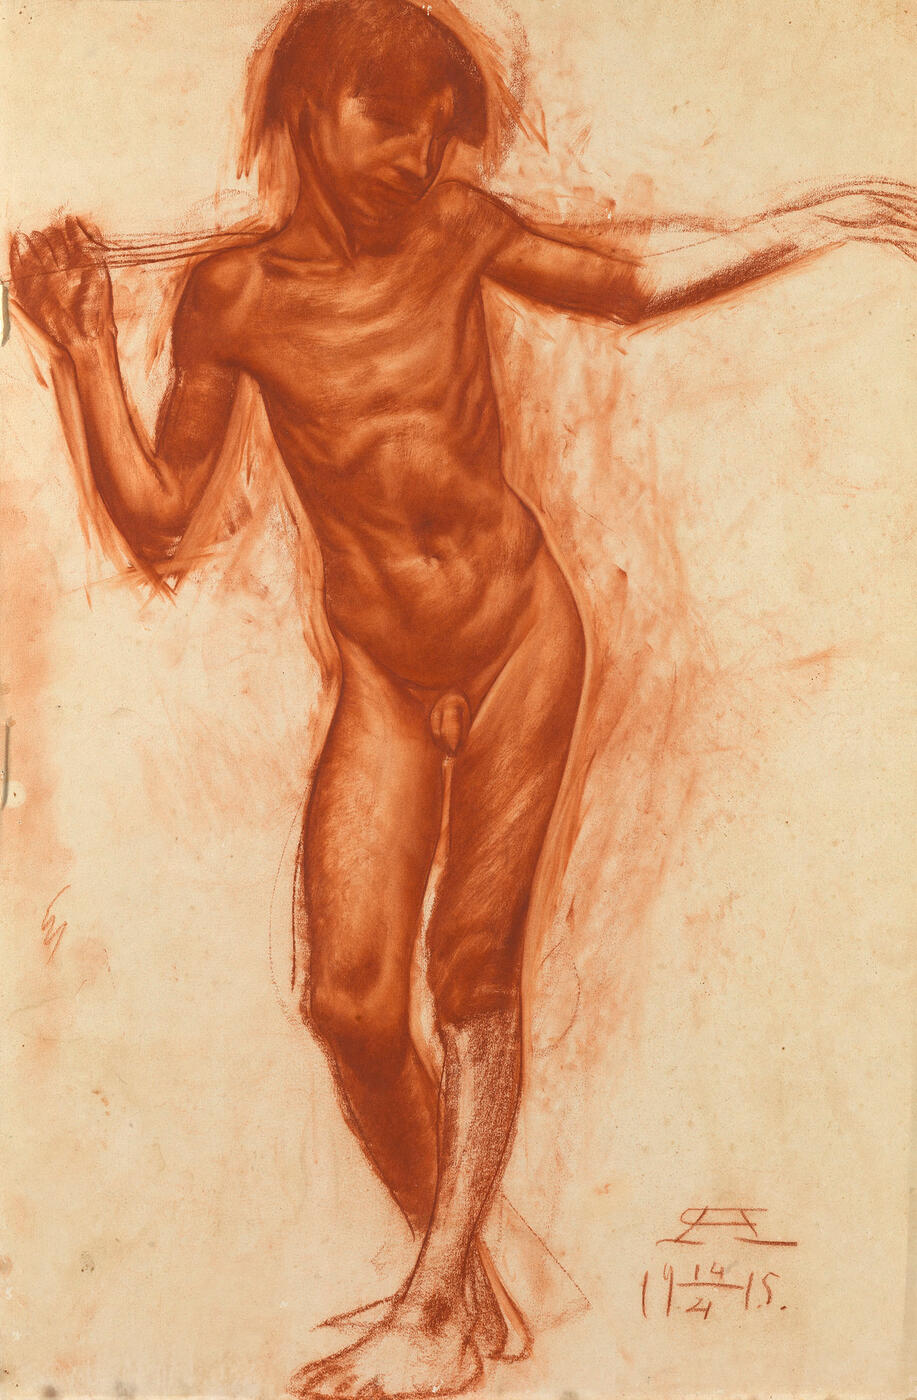 Nude Boy with a Stick